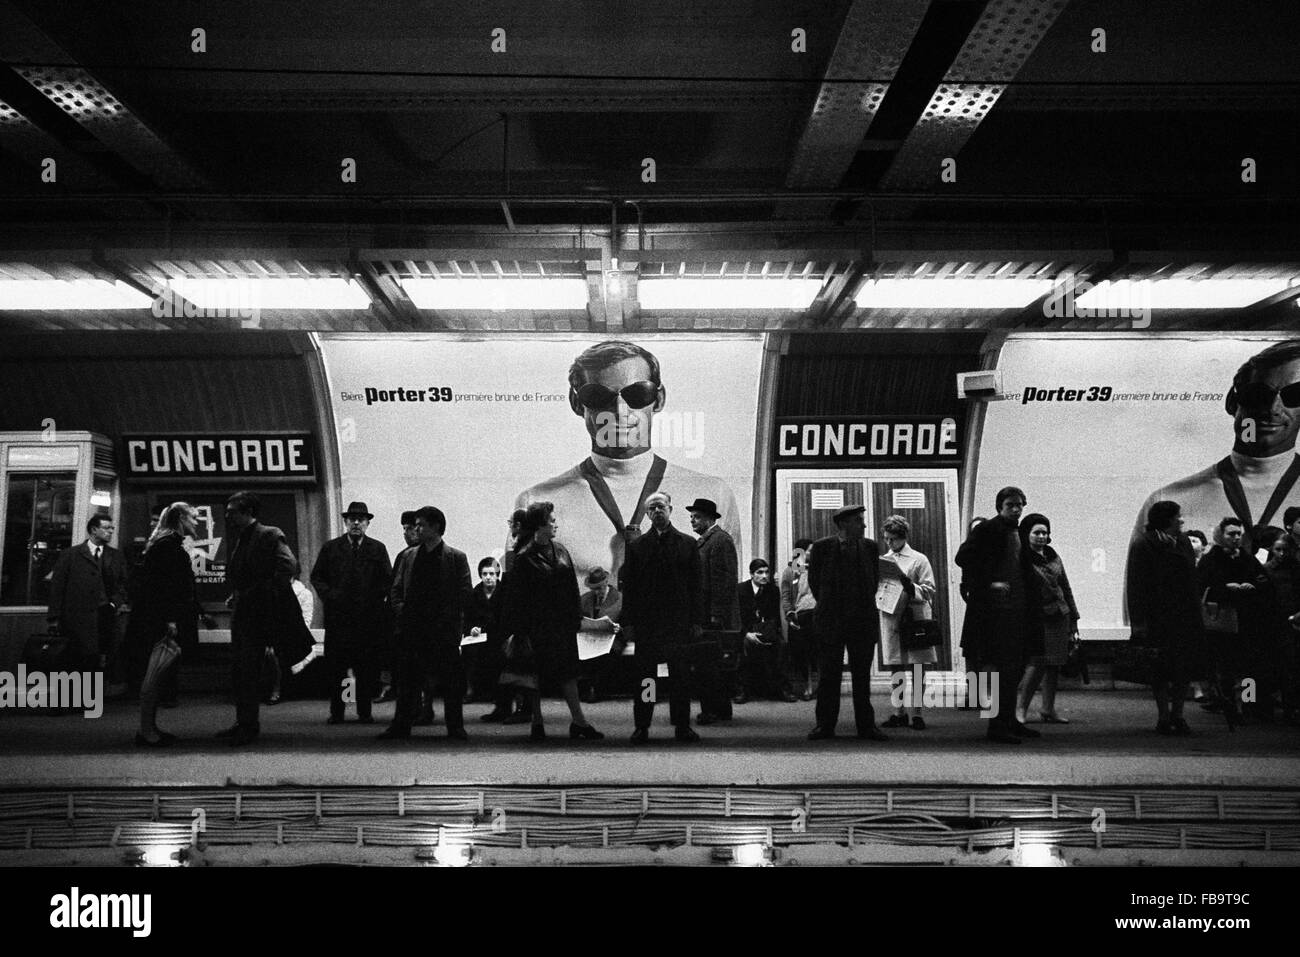 1968 in PARIS. -  France / Ile-de-France (region)  -  1968 in PARIS. -  Atmosphere in the 'concorde' subway station; - Paris; - 1968.   -  Philippe Gras / Le Pictorium Stock Photo